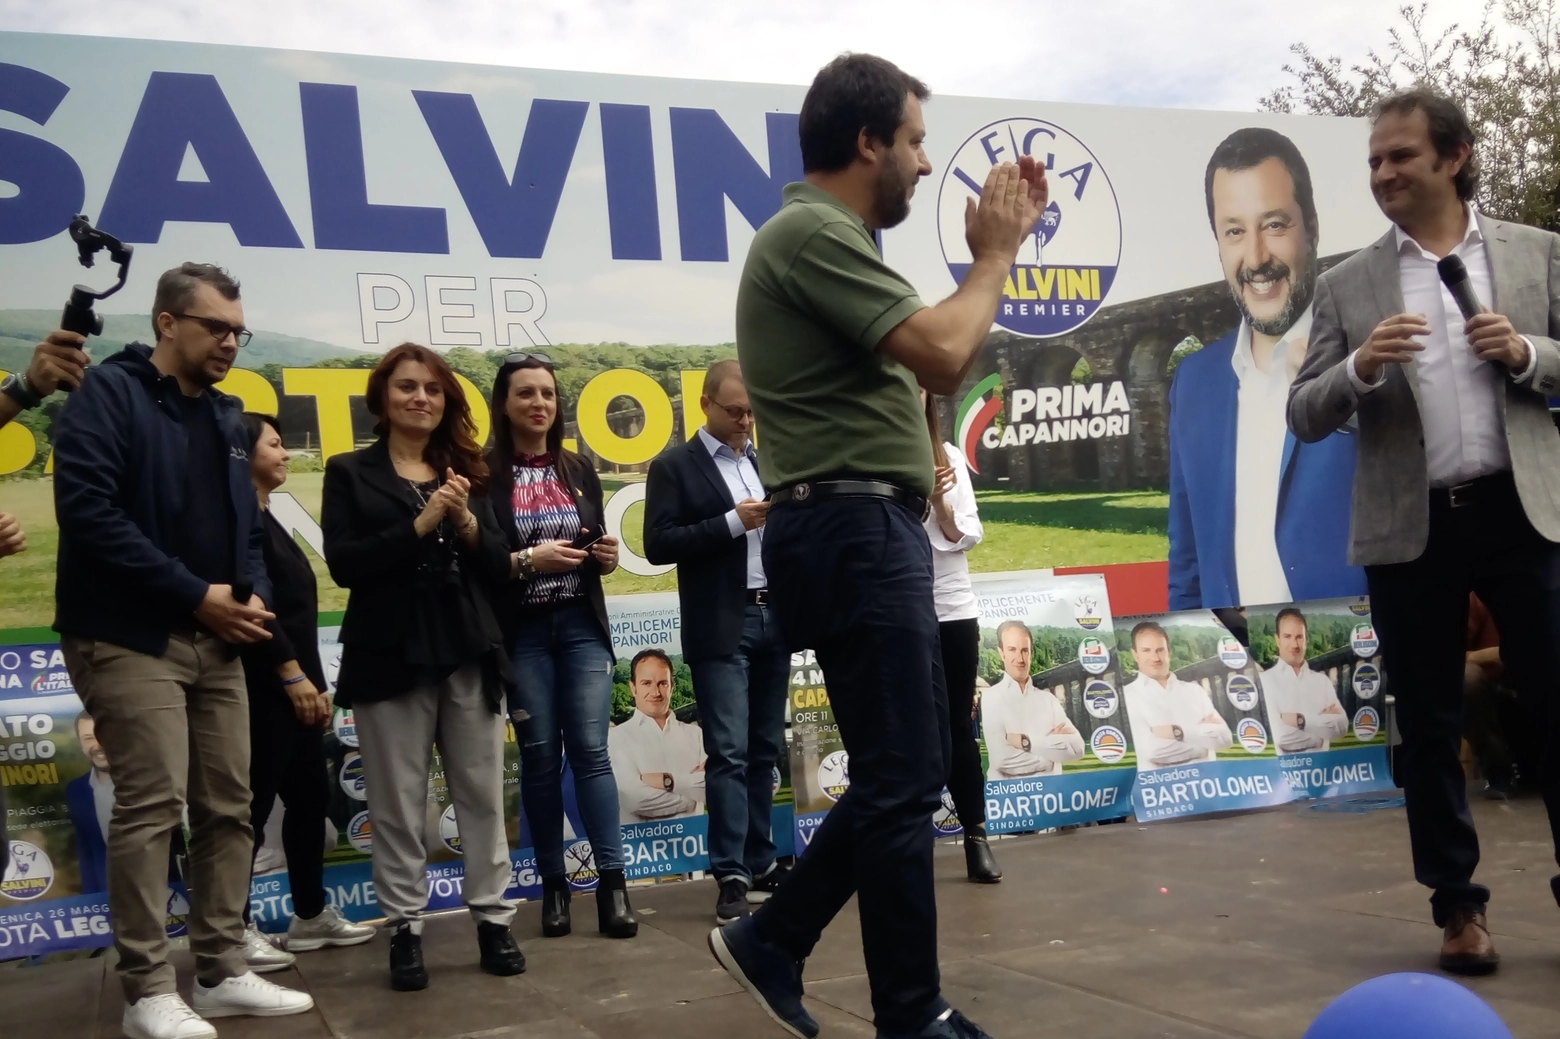 Salvini a Capannori